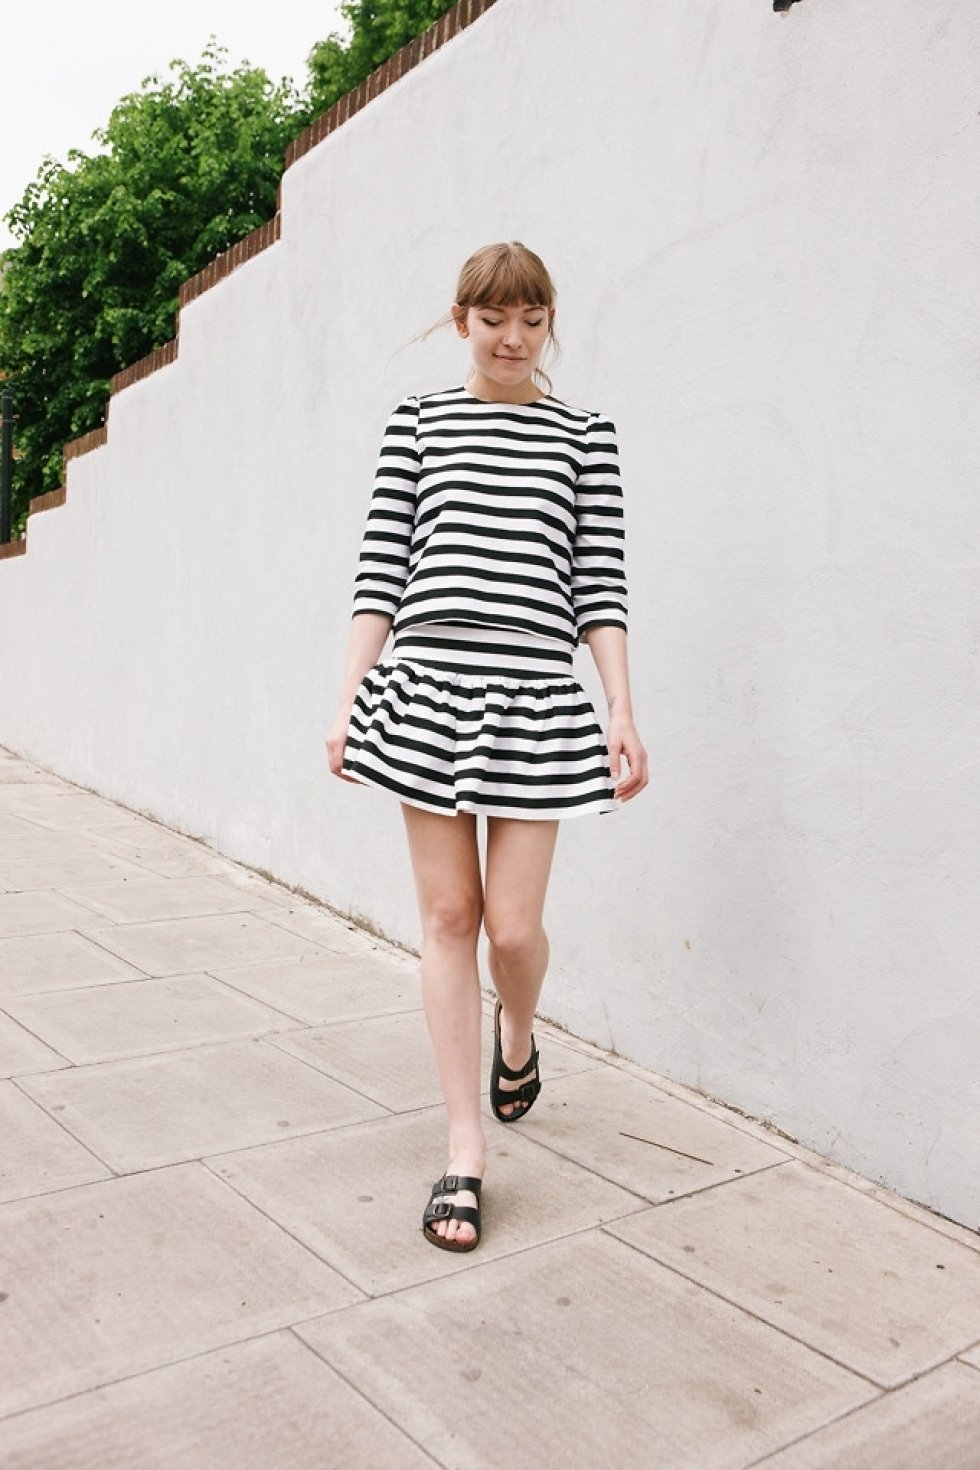 Foto: http://lookbook.nu/look/6239519-Dahlia-Stripy-Top-And-Skirt-Set-Monochrome - Inspiration 2014: Sæsonens sort/hvid monokrome look